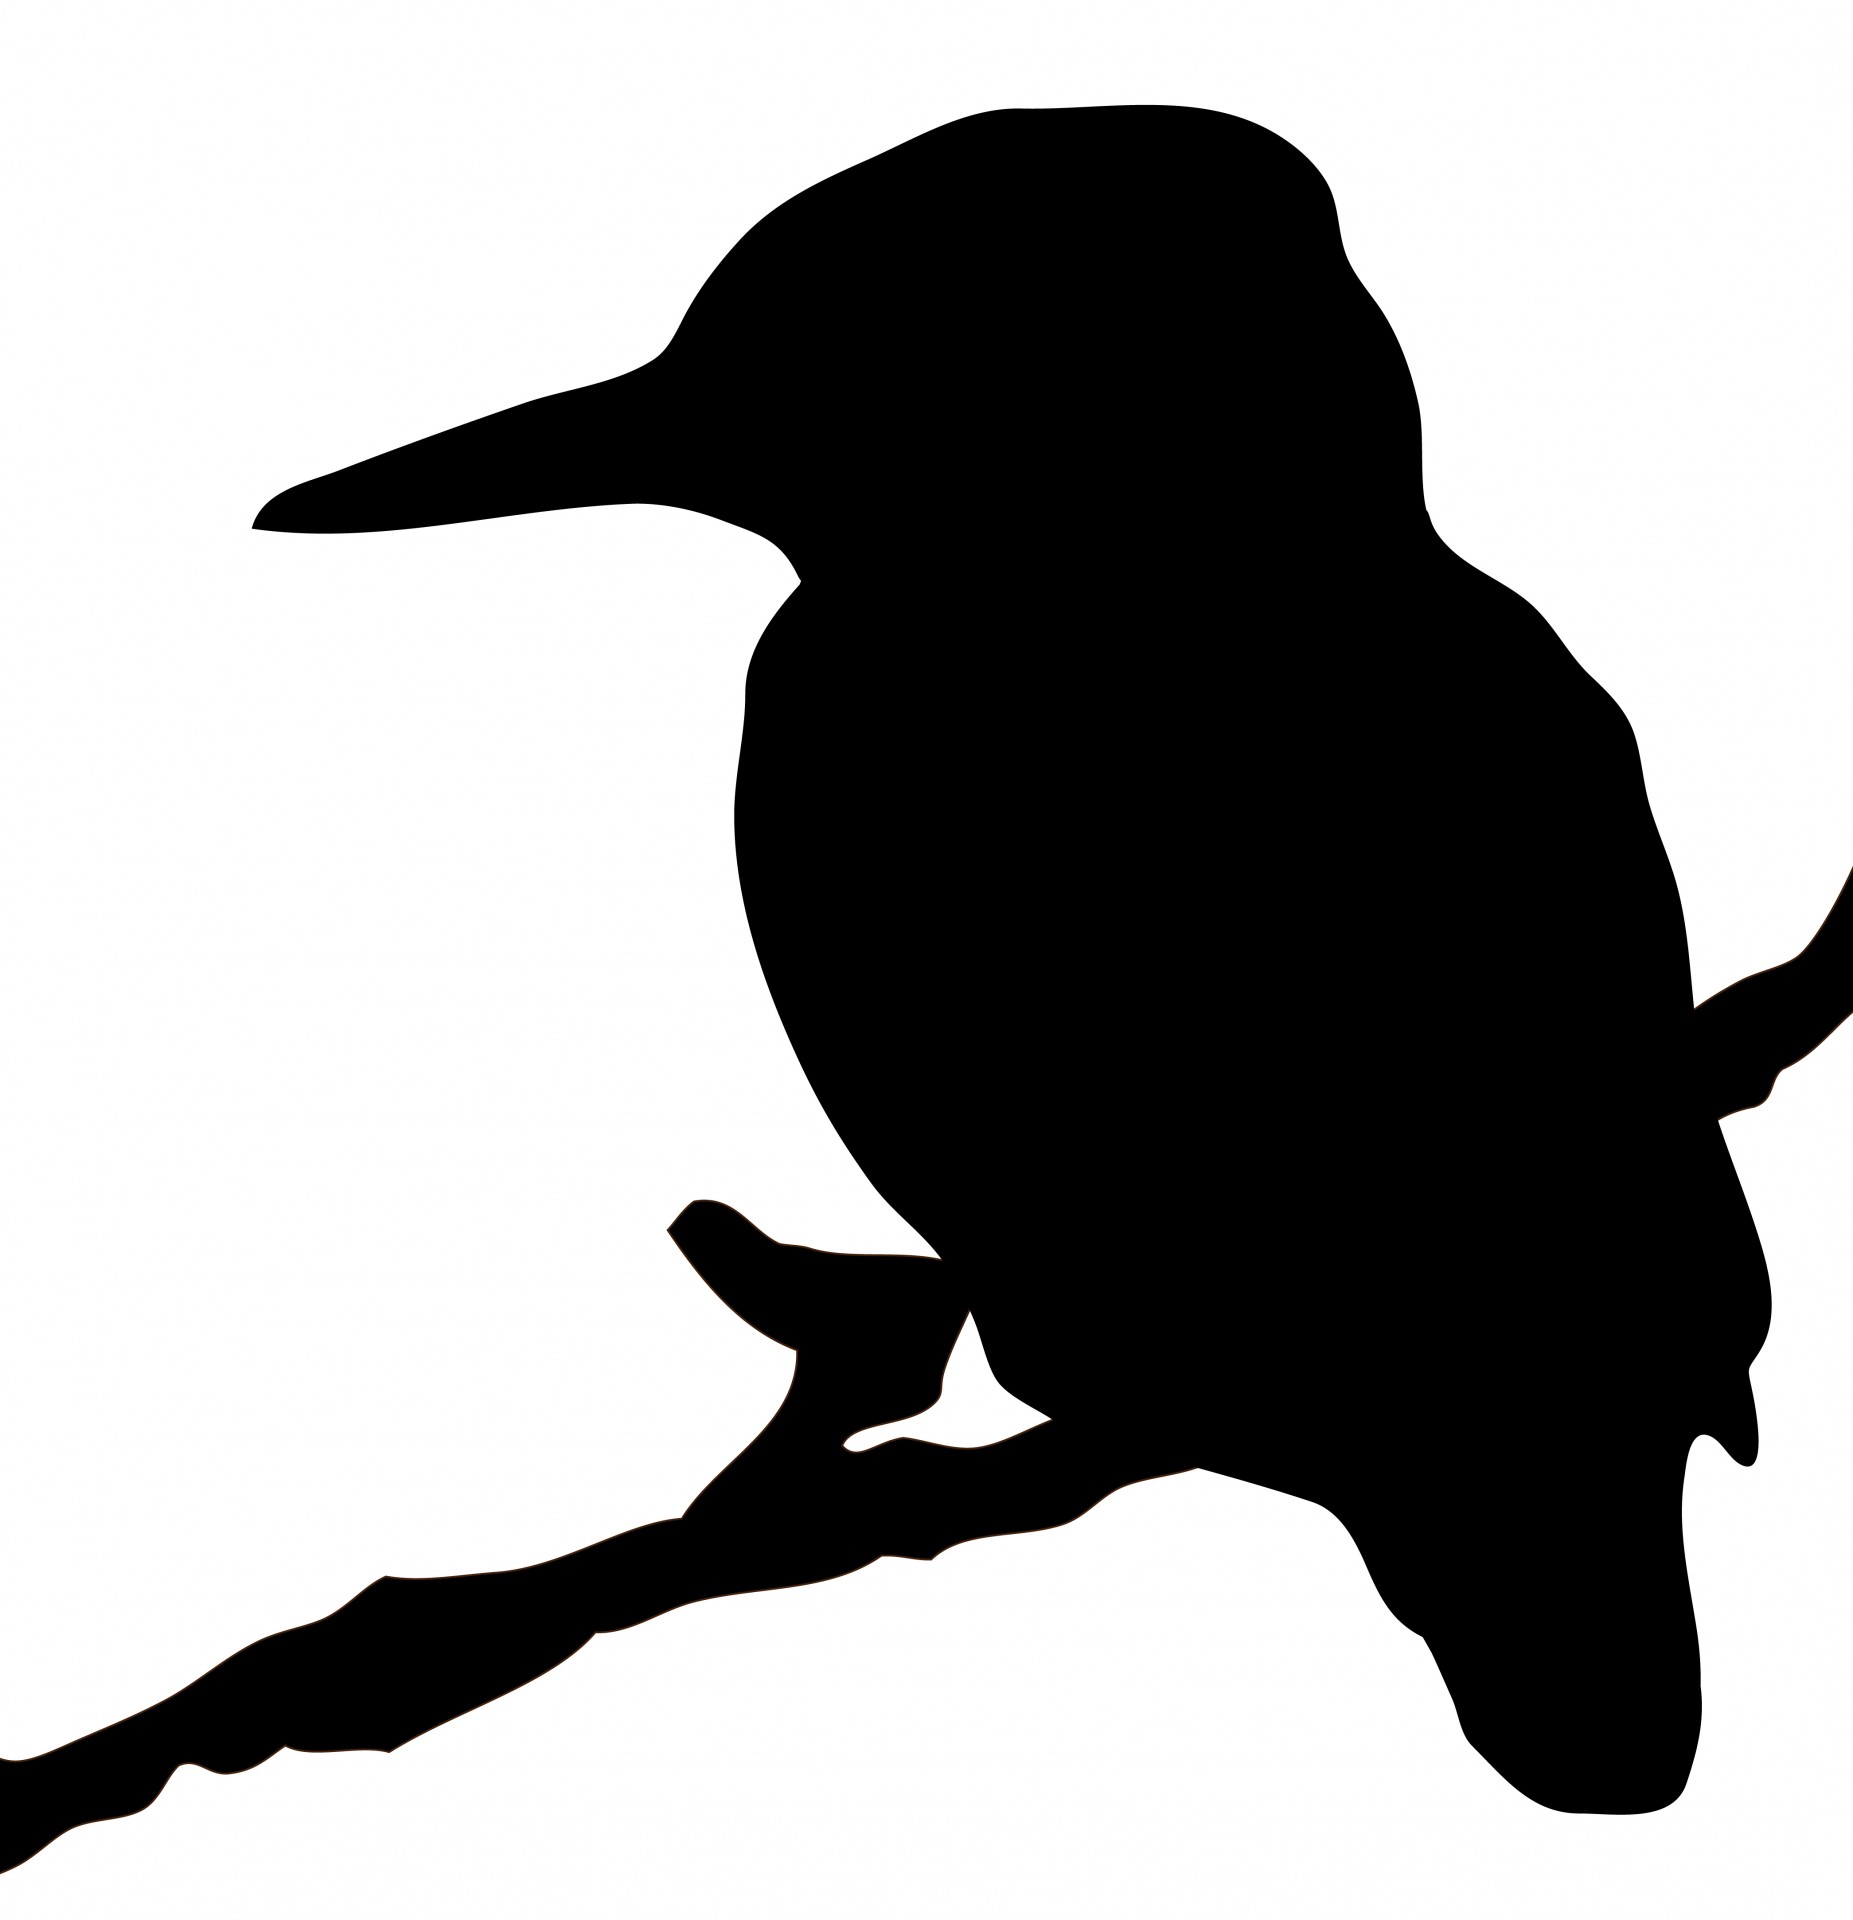 Kingfisher Bird Silhouette Clipart Free Stock Photo - Public ...